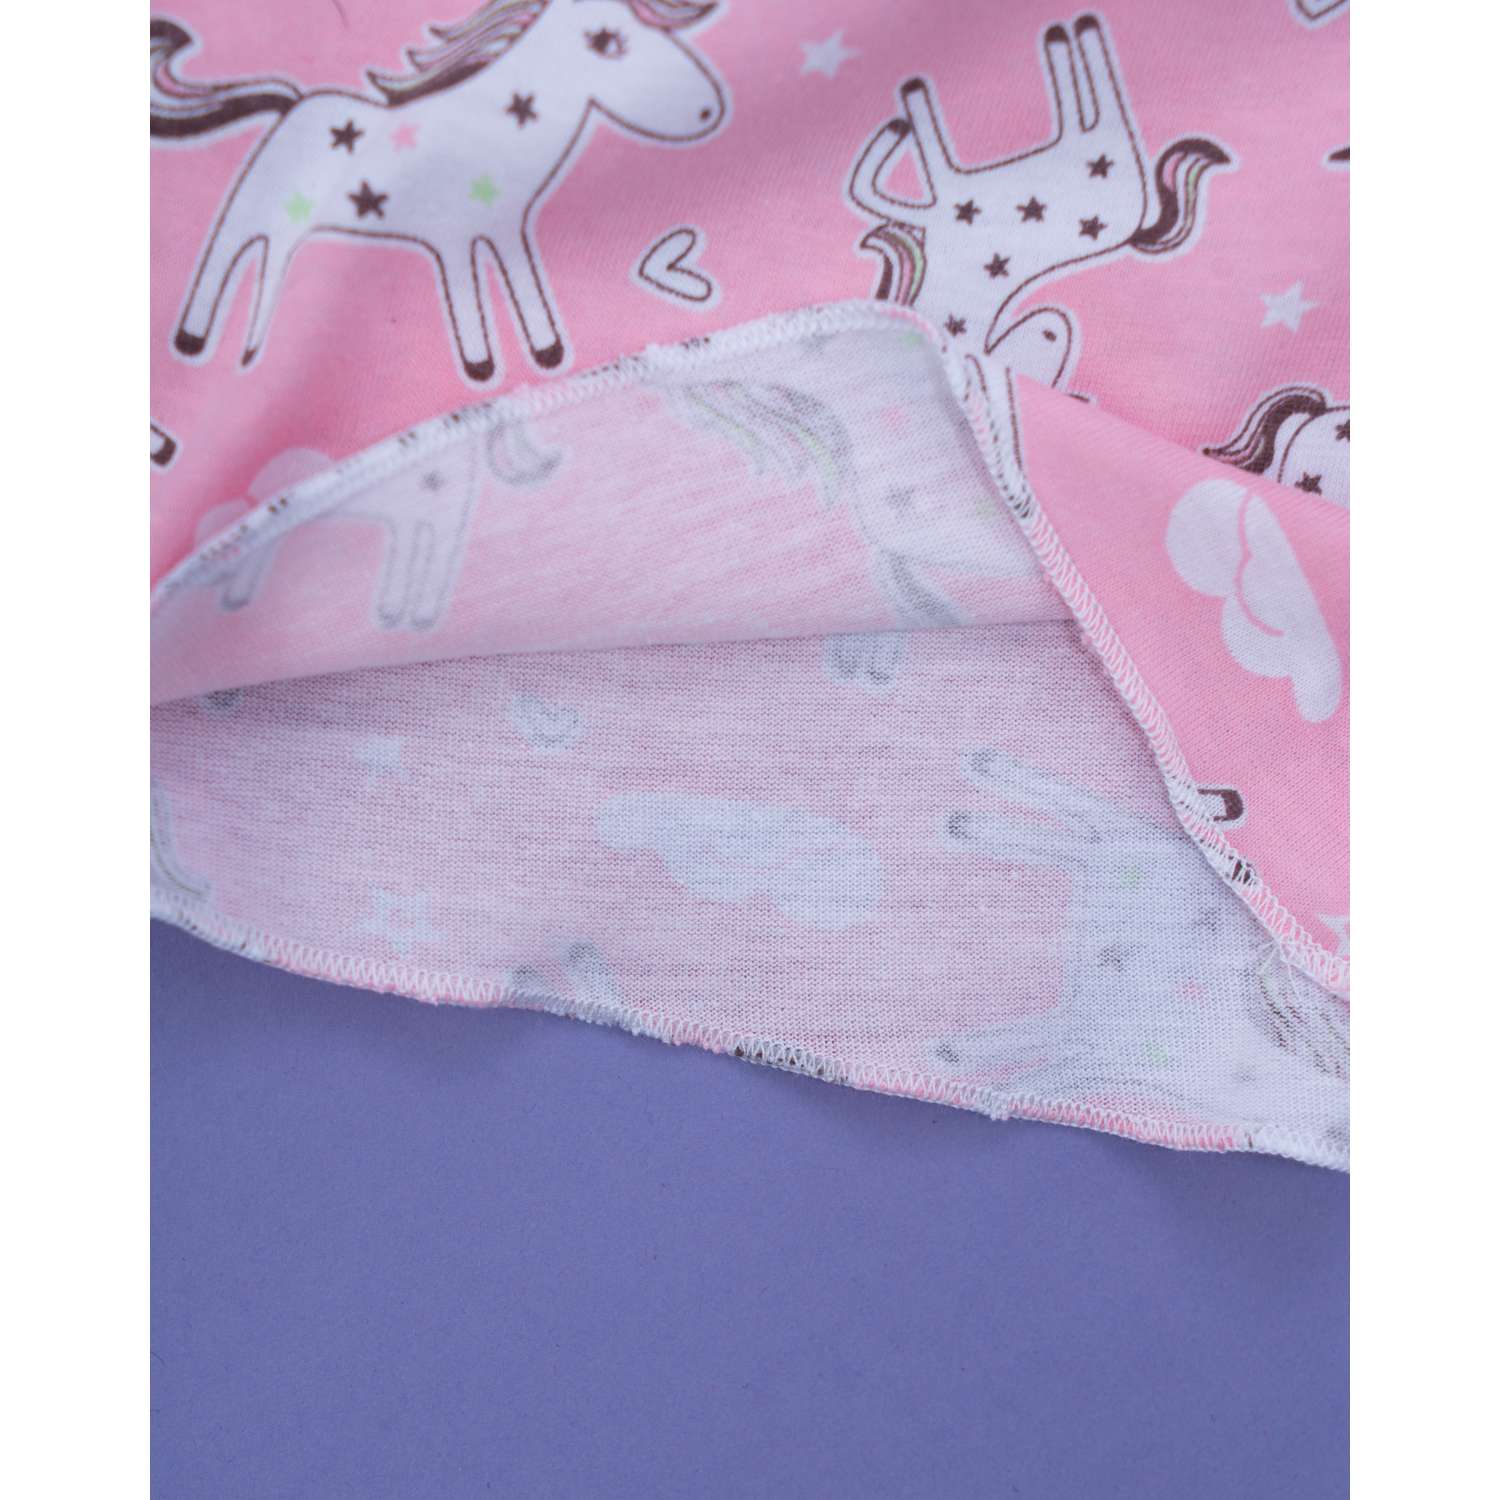 Пижама Babycollection 603/pjm004/3/sph/k1/001/p1/W*dбелый розовый - фото 12